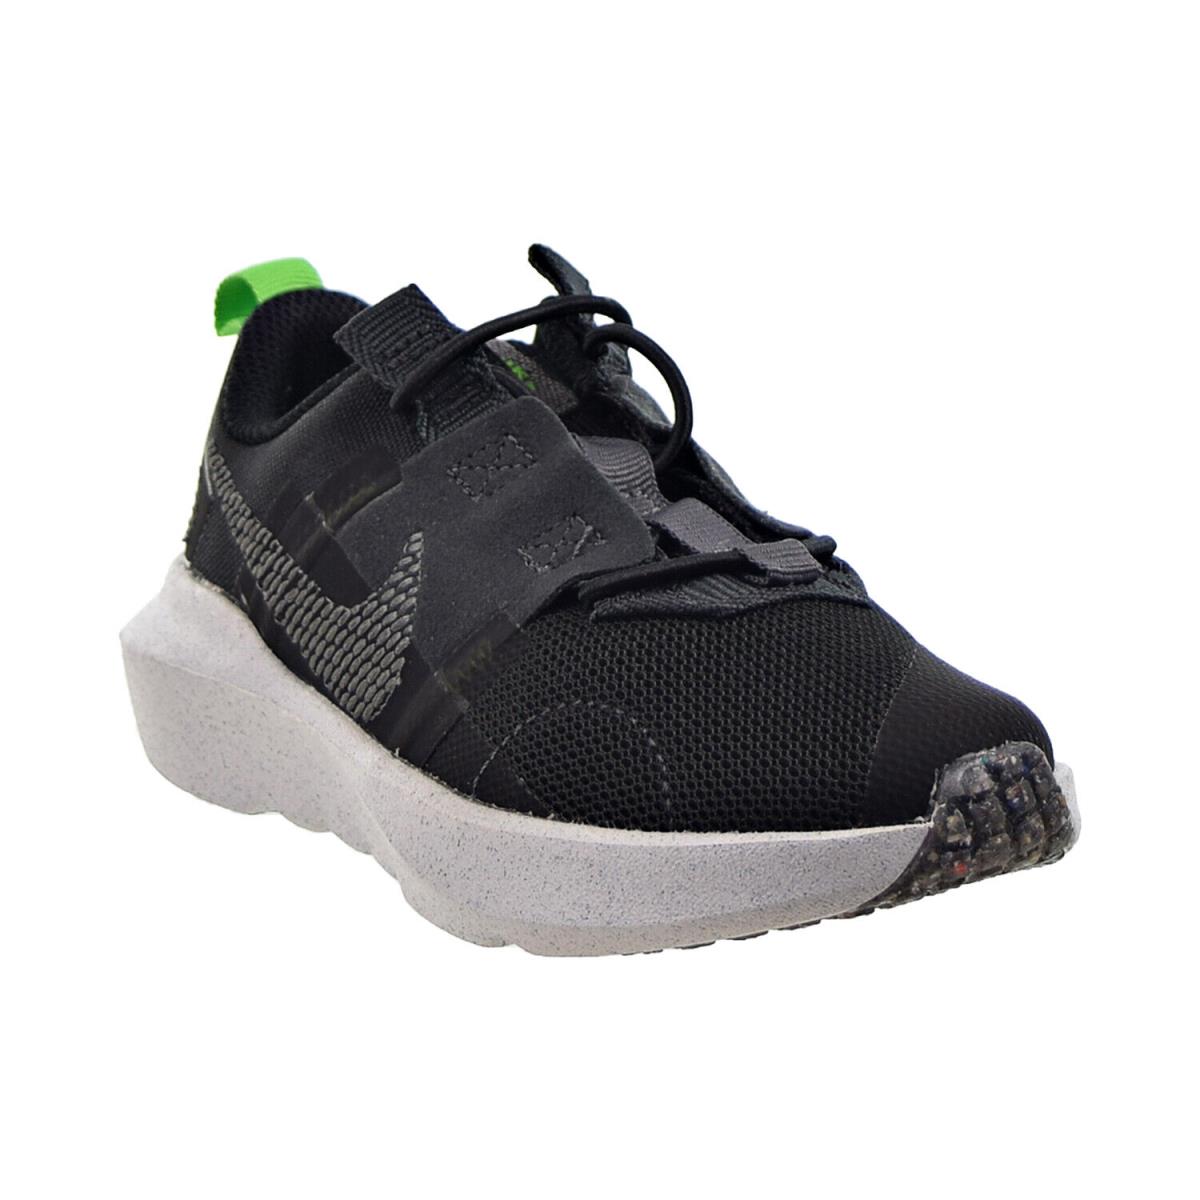 Nike Crater Impact PS Little Kids` Shoes Black-iron Grey-off Noir DB3552-001 - Black-Iron Grey-off Noir-dk Smoke Grey